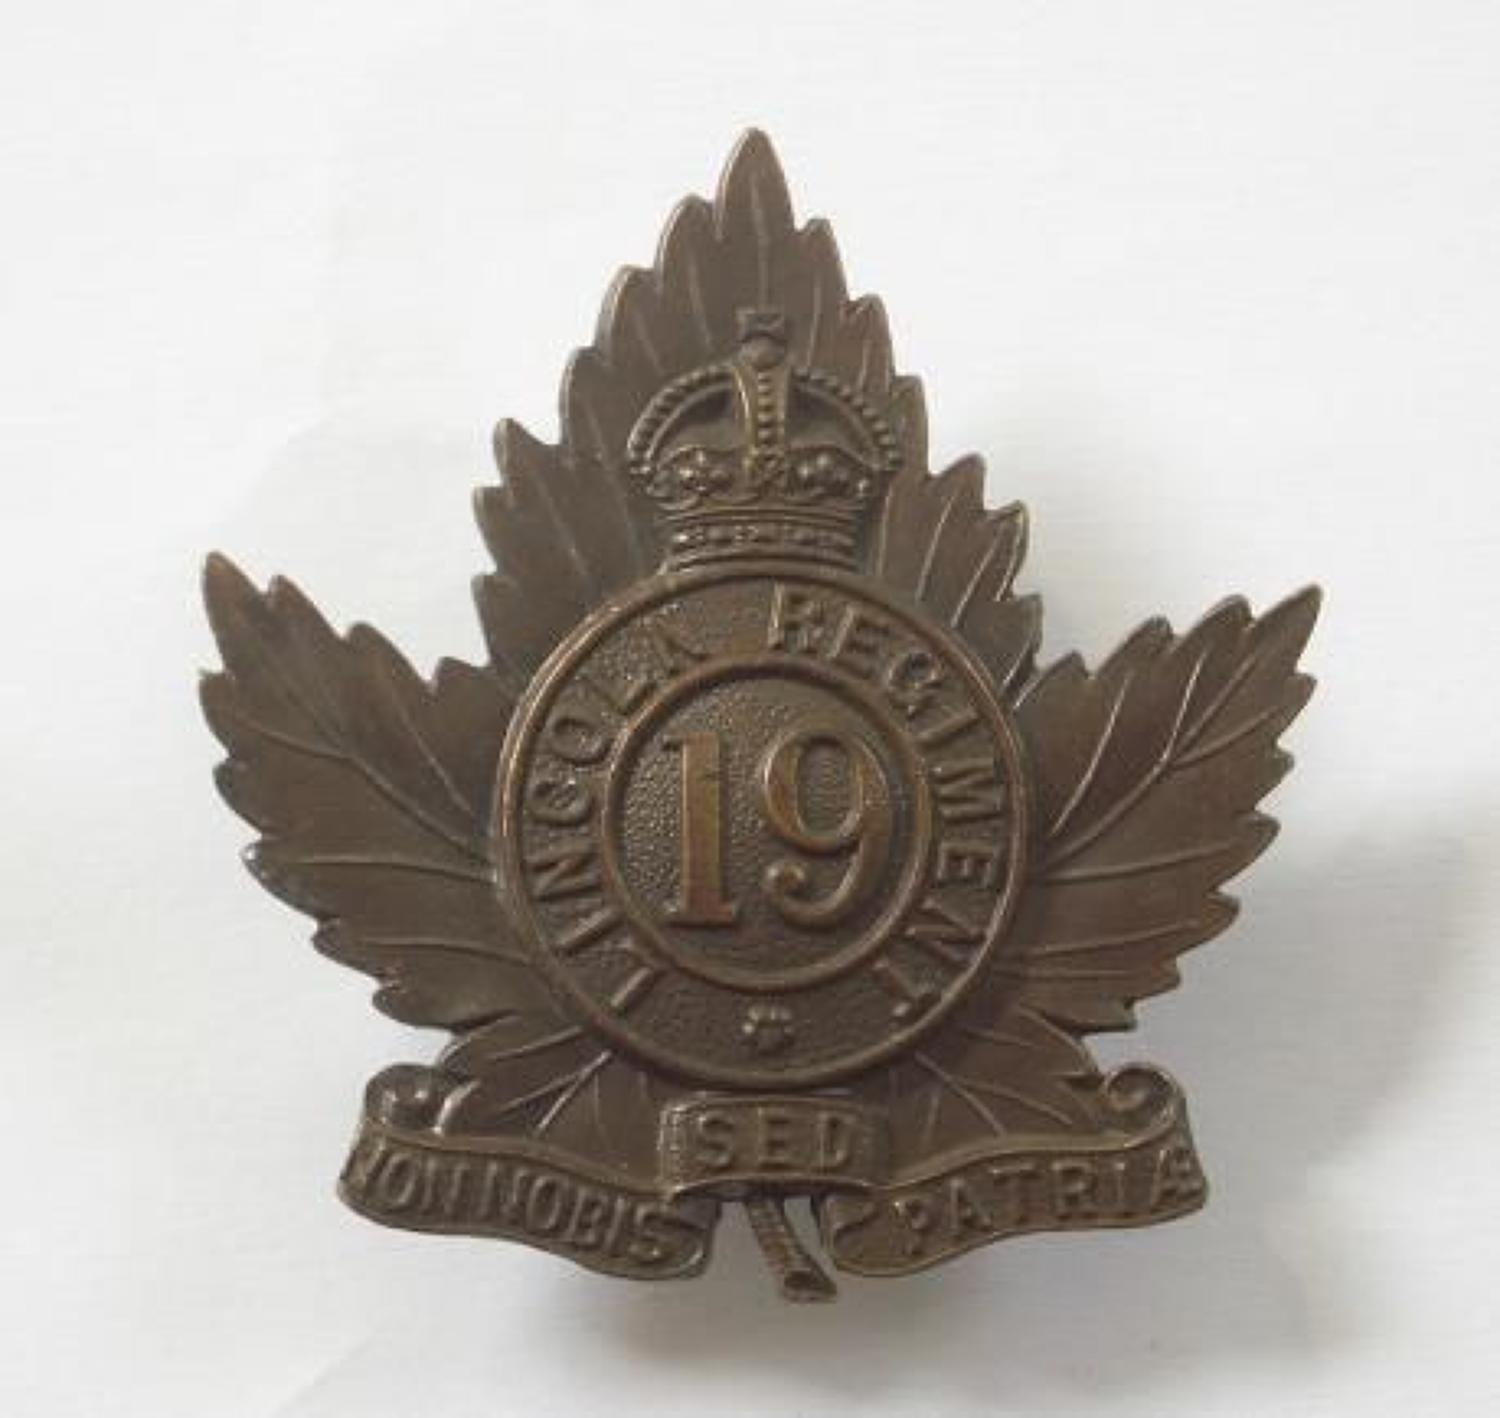 Canadian 19th Lincoln Regiment cap badge  by JR Gaunt & Son, London.